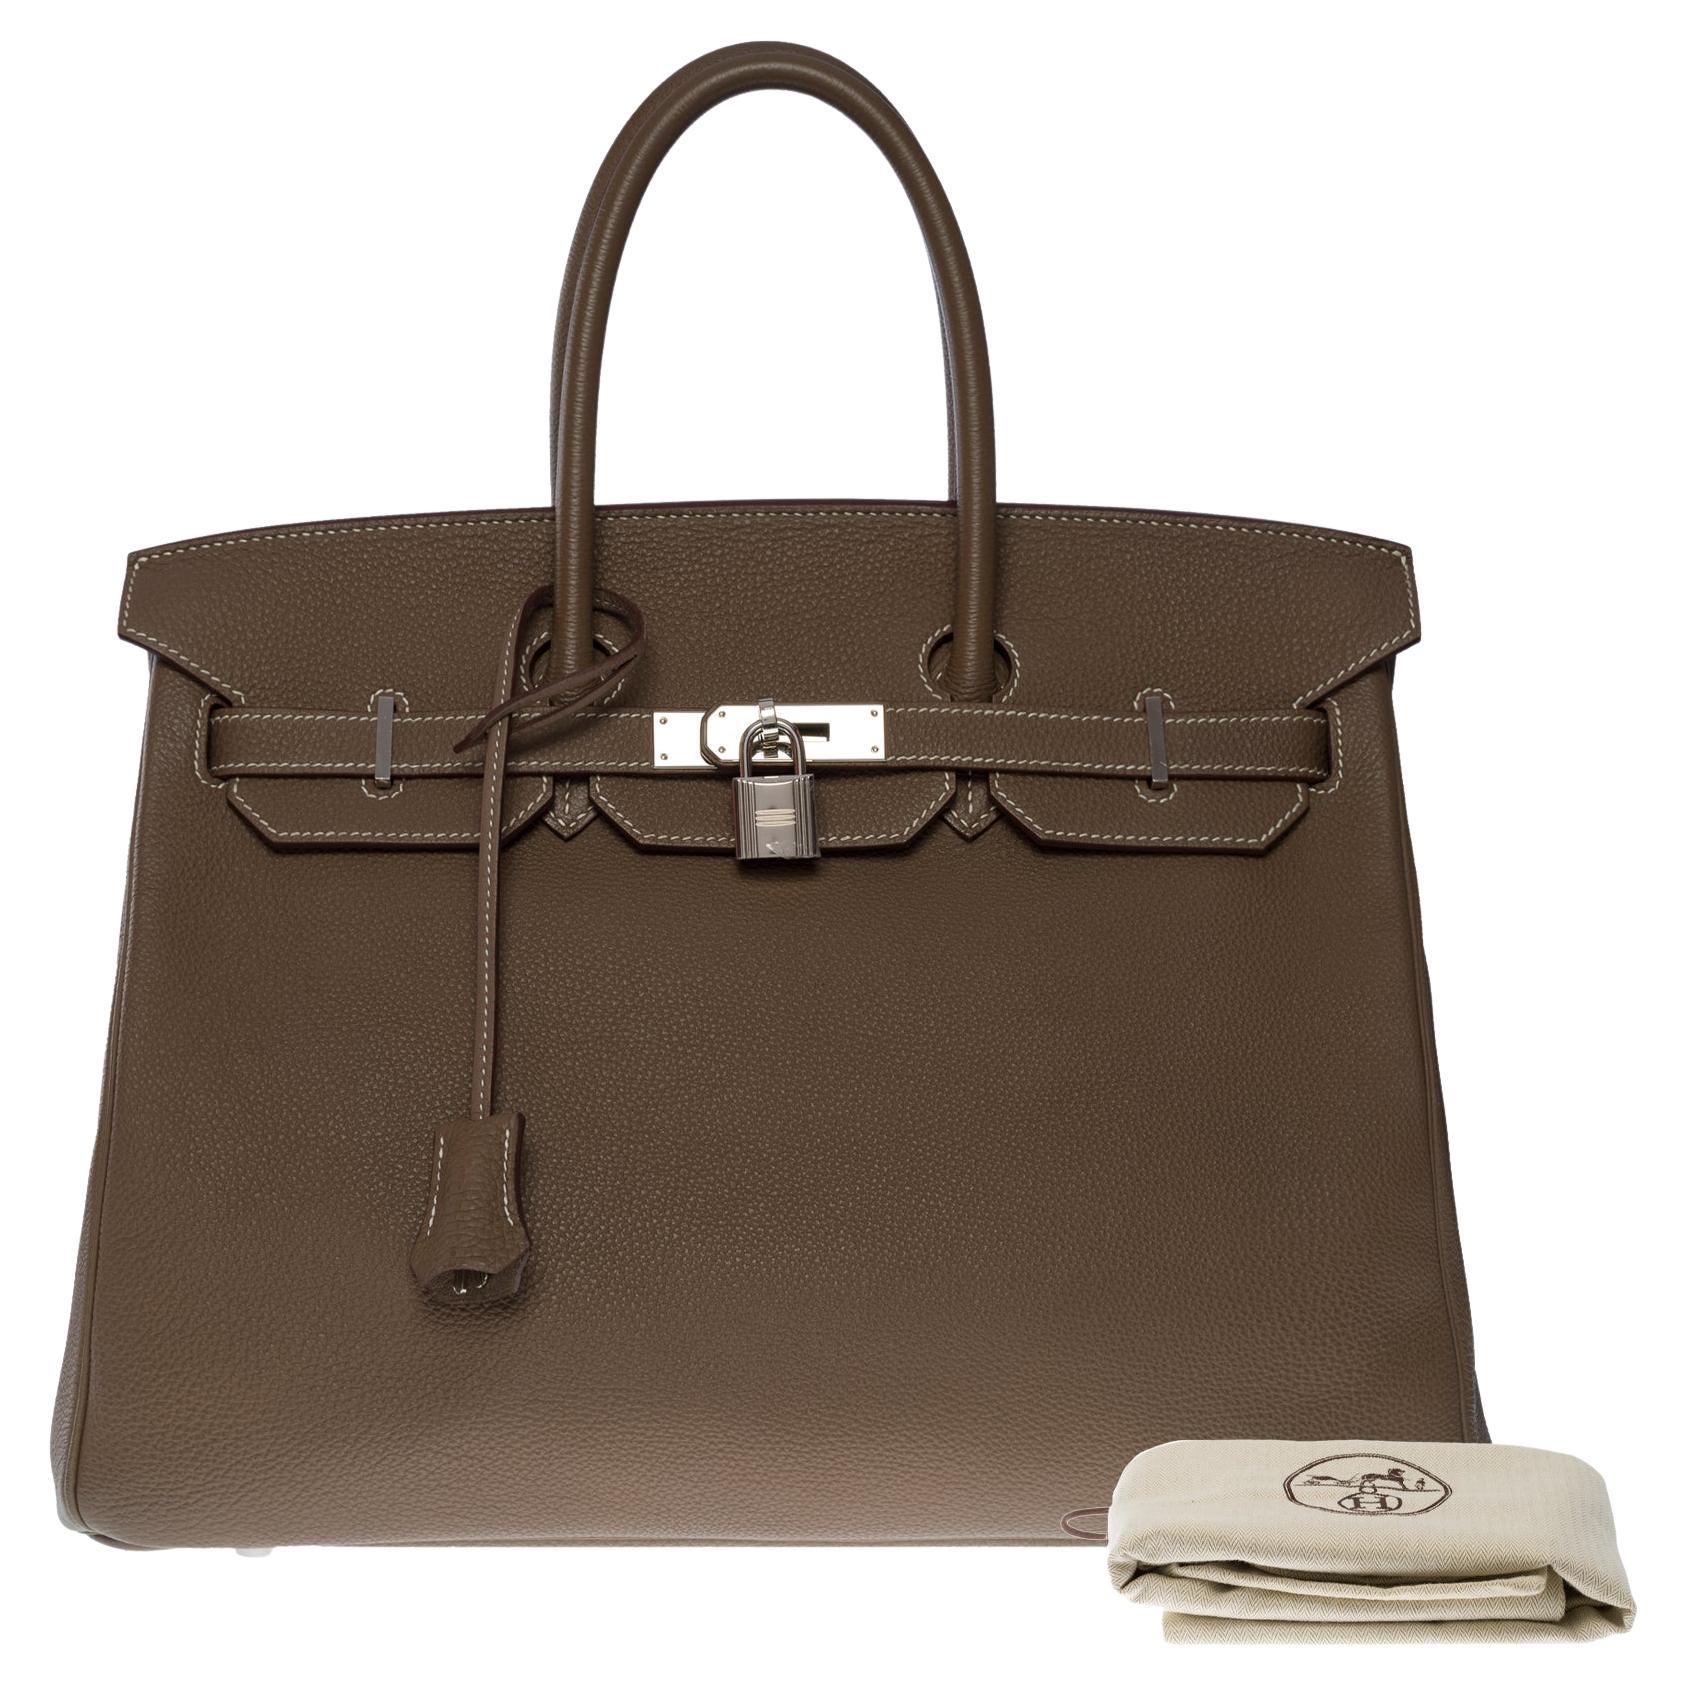 Stunning Hermès Birkin 35 handbag in etoupe Togo leather, SHW